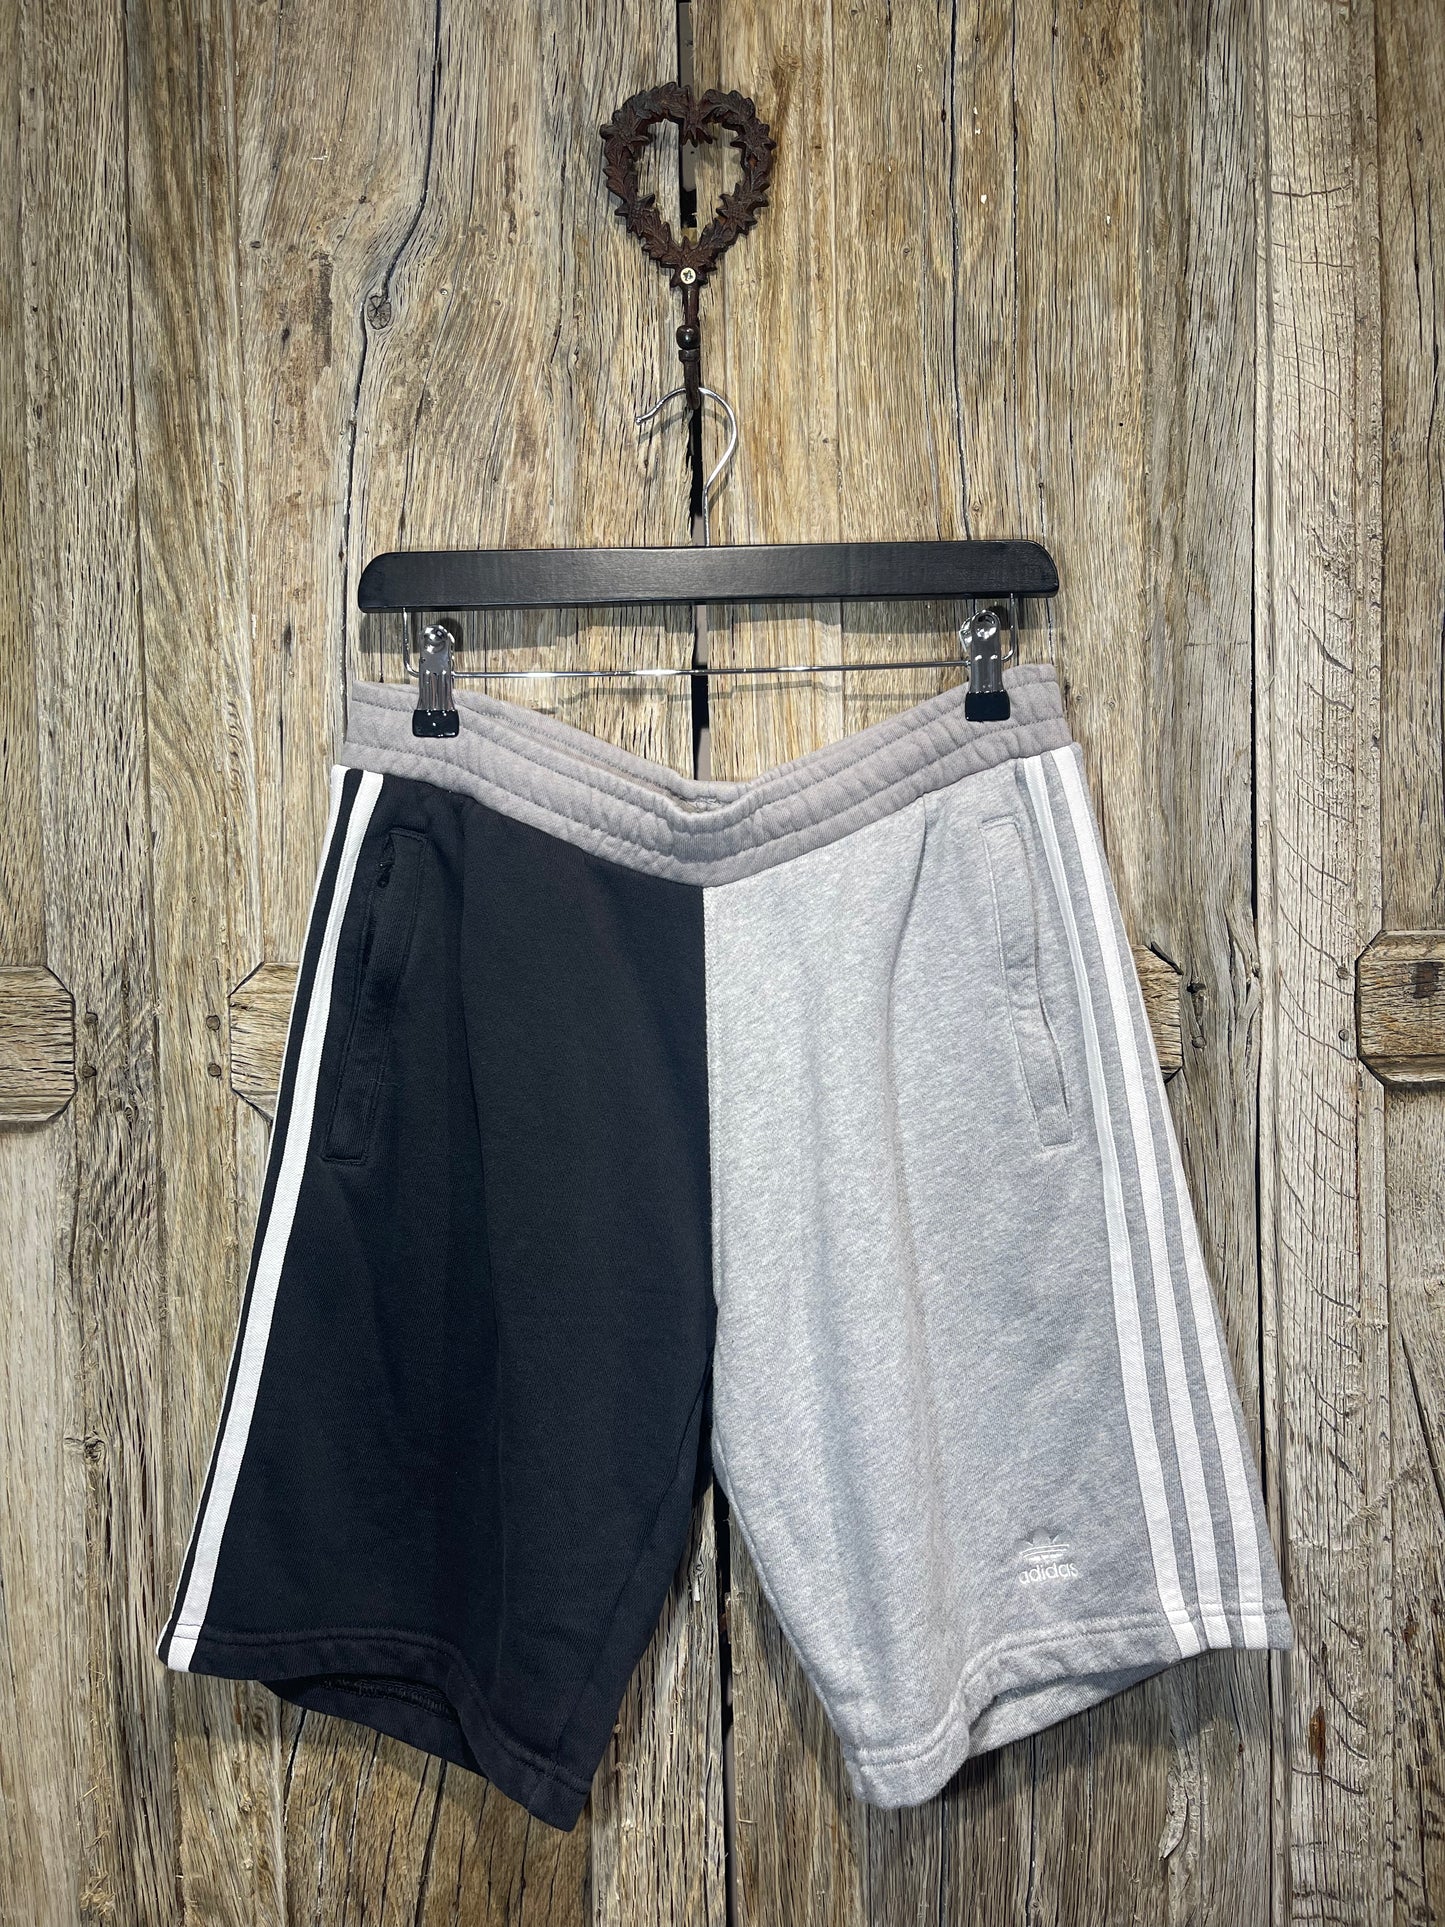 Adidas Originals Grey Jersey Shorts